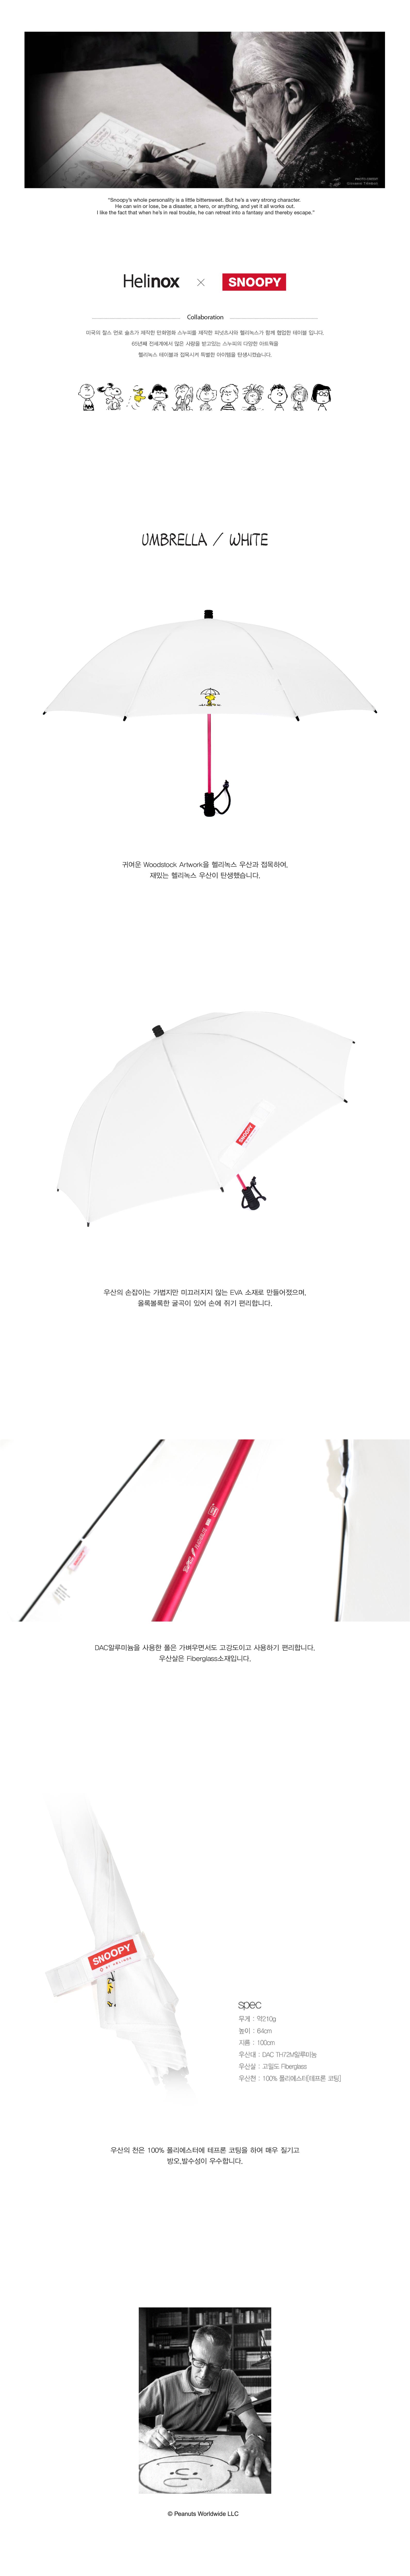 20150608 Snoopy x Helinox Umbrella-01.jpg